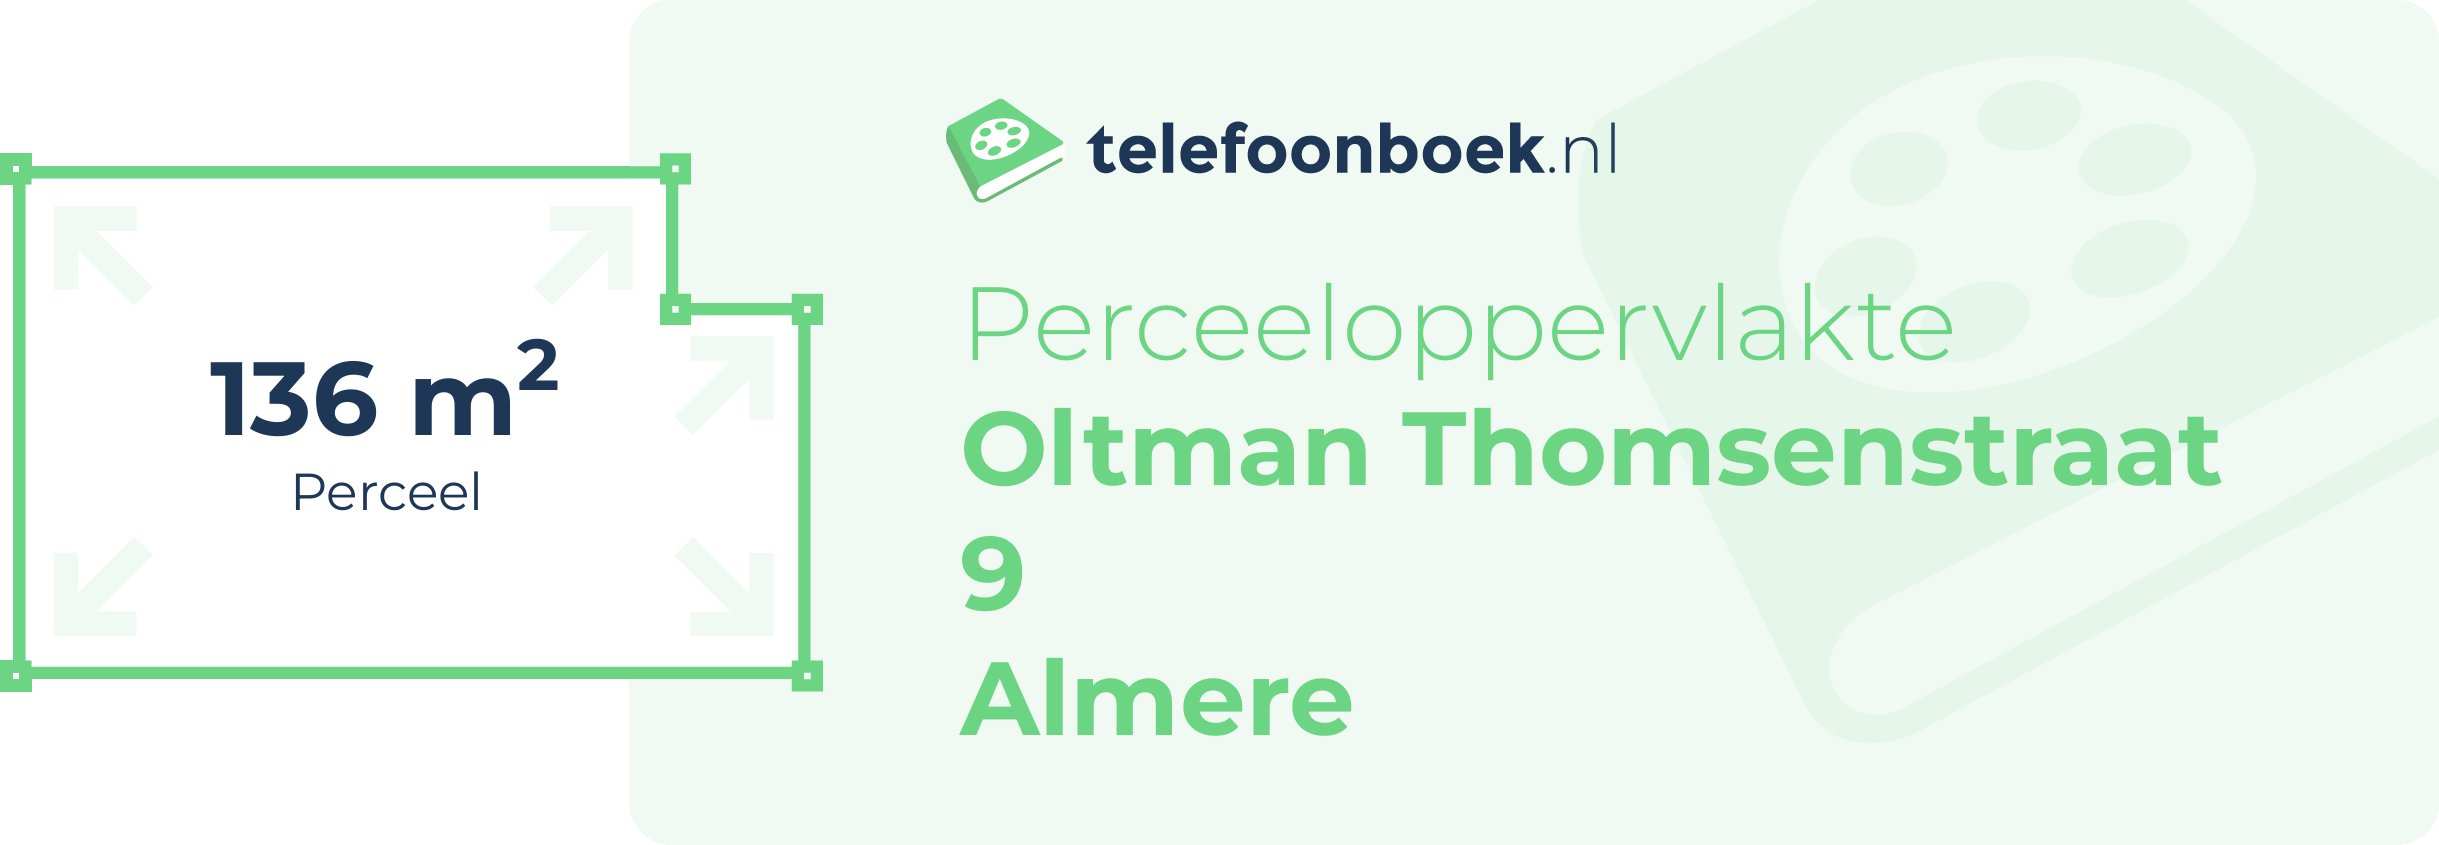 Perceeloppervlakte Oltman Thomsenstraat 9 Almere